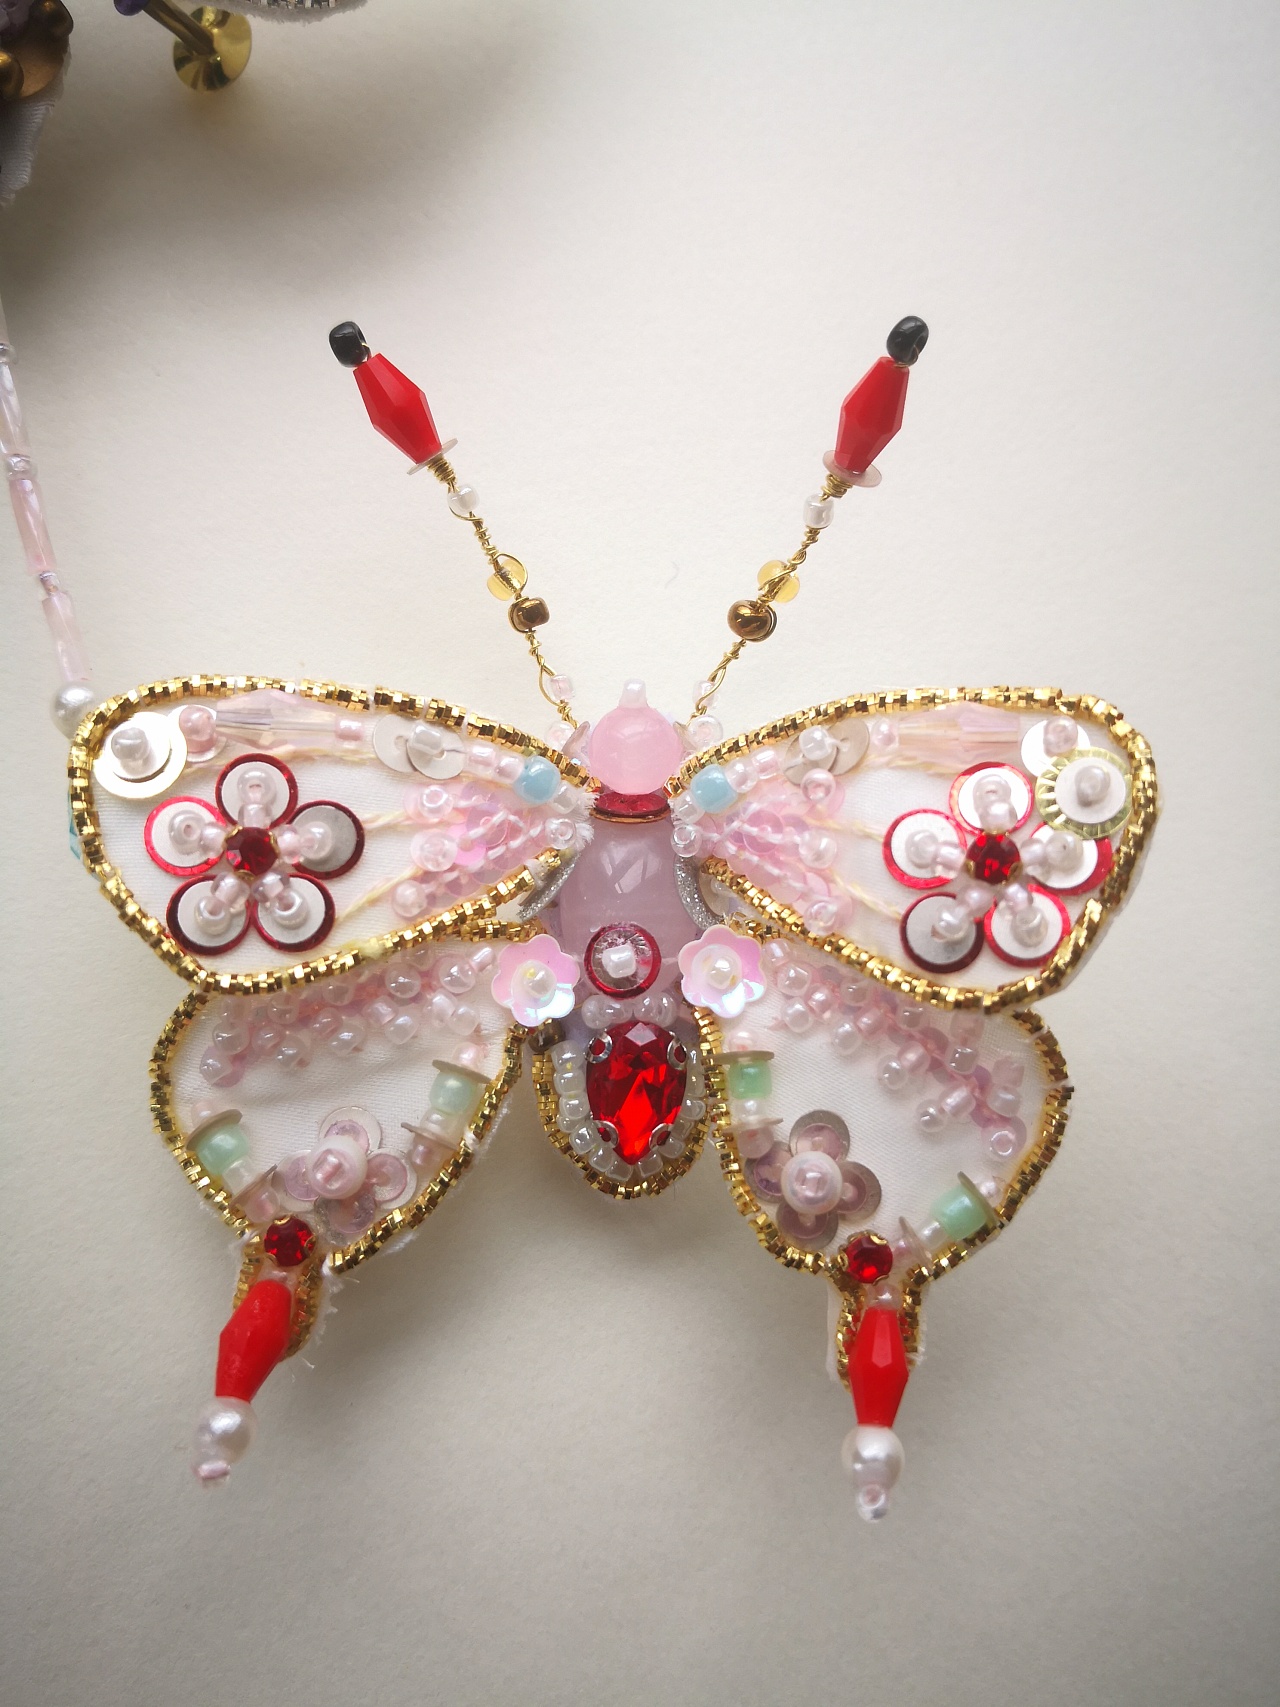 Mikimoto 御木本 The Japanese Sense of Beauty 珍珠胸针 | iDaily Jewelry · 每日珠宝杂志